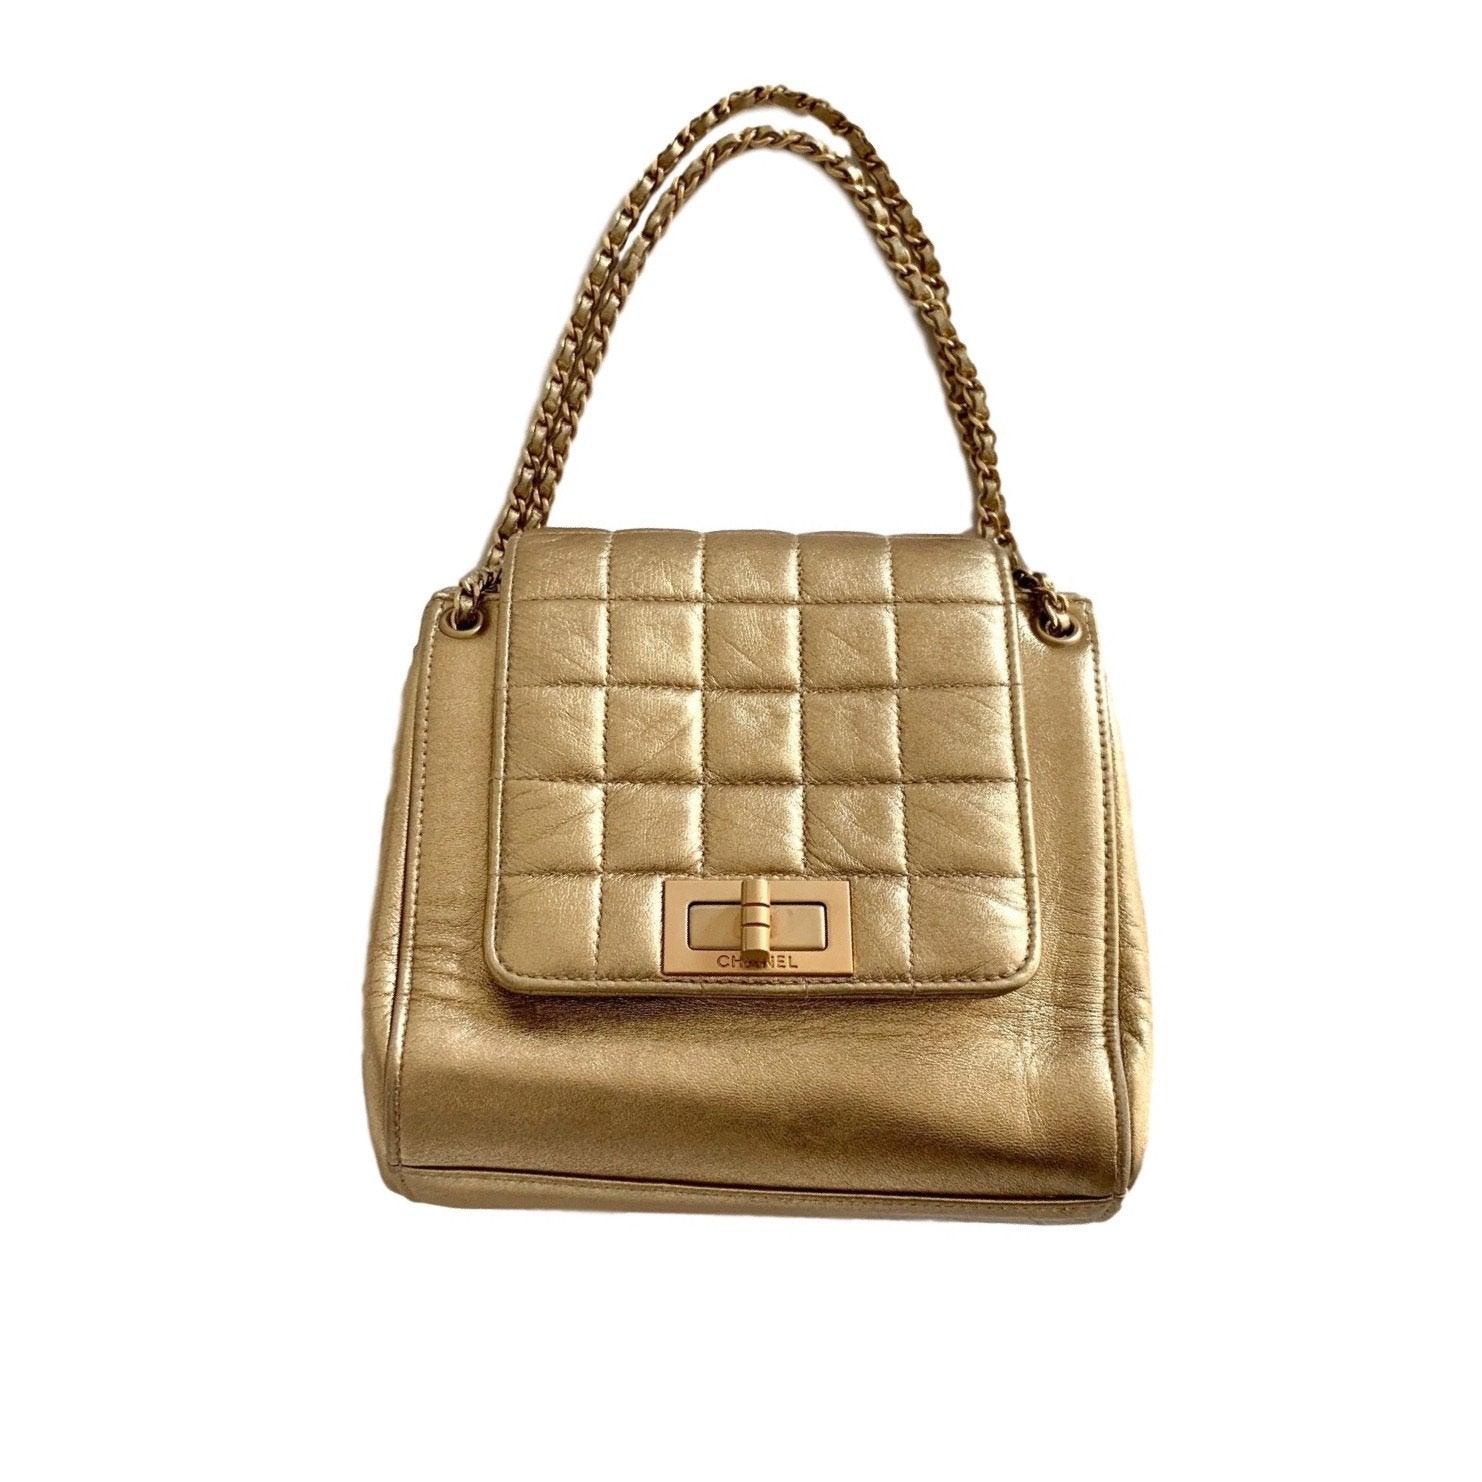 Chanel Gold Mini Chain Top Handle Bag